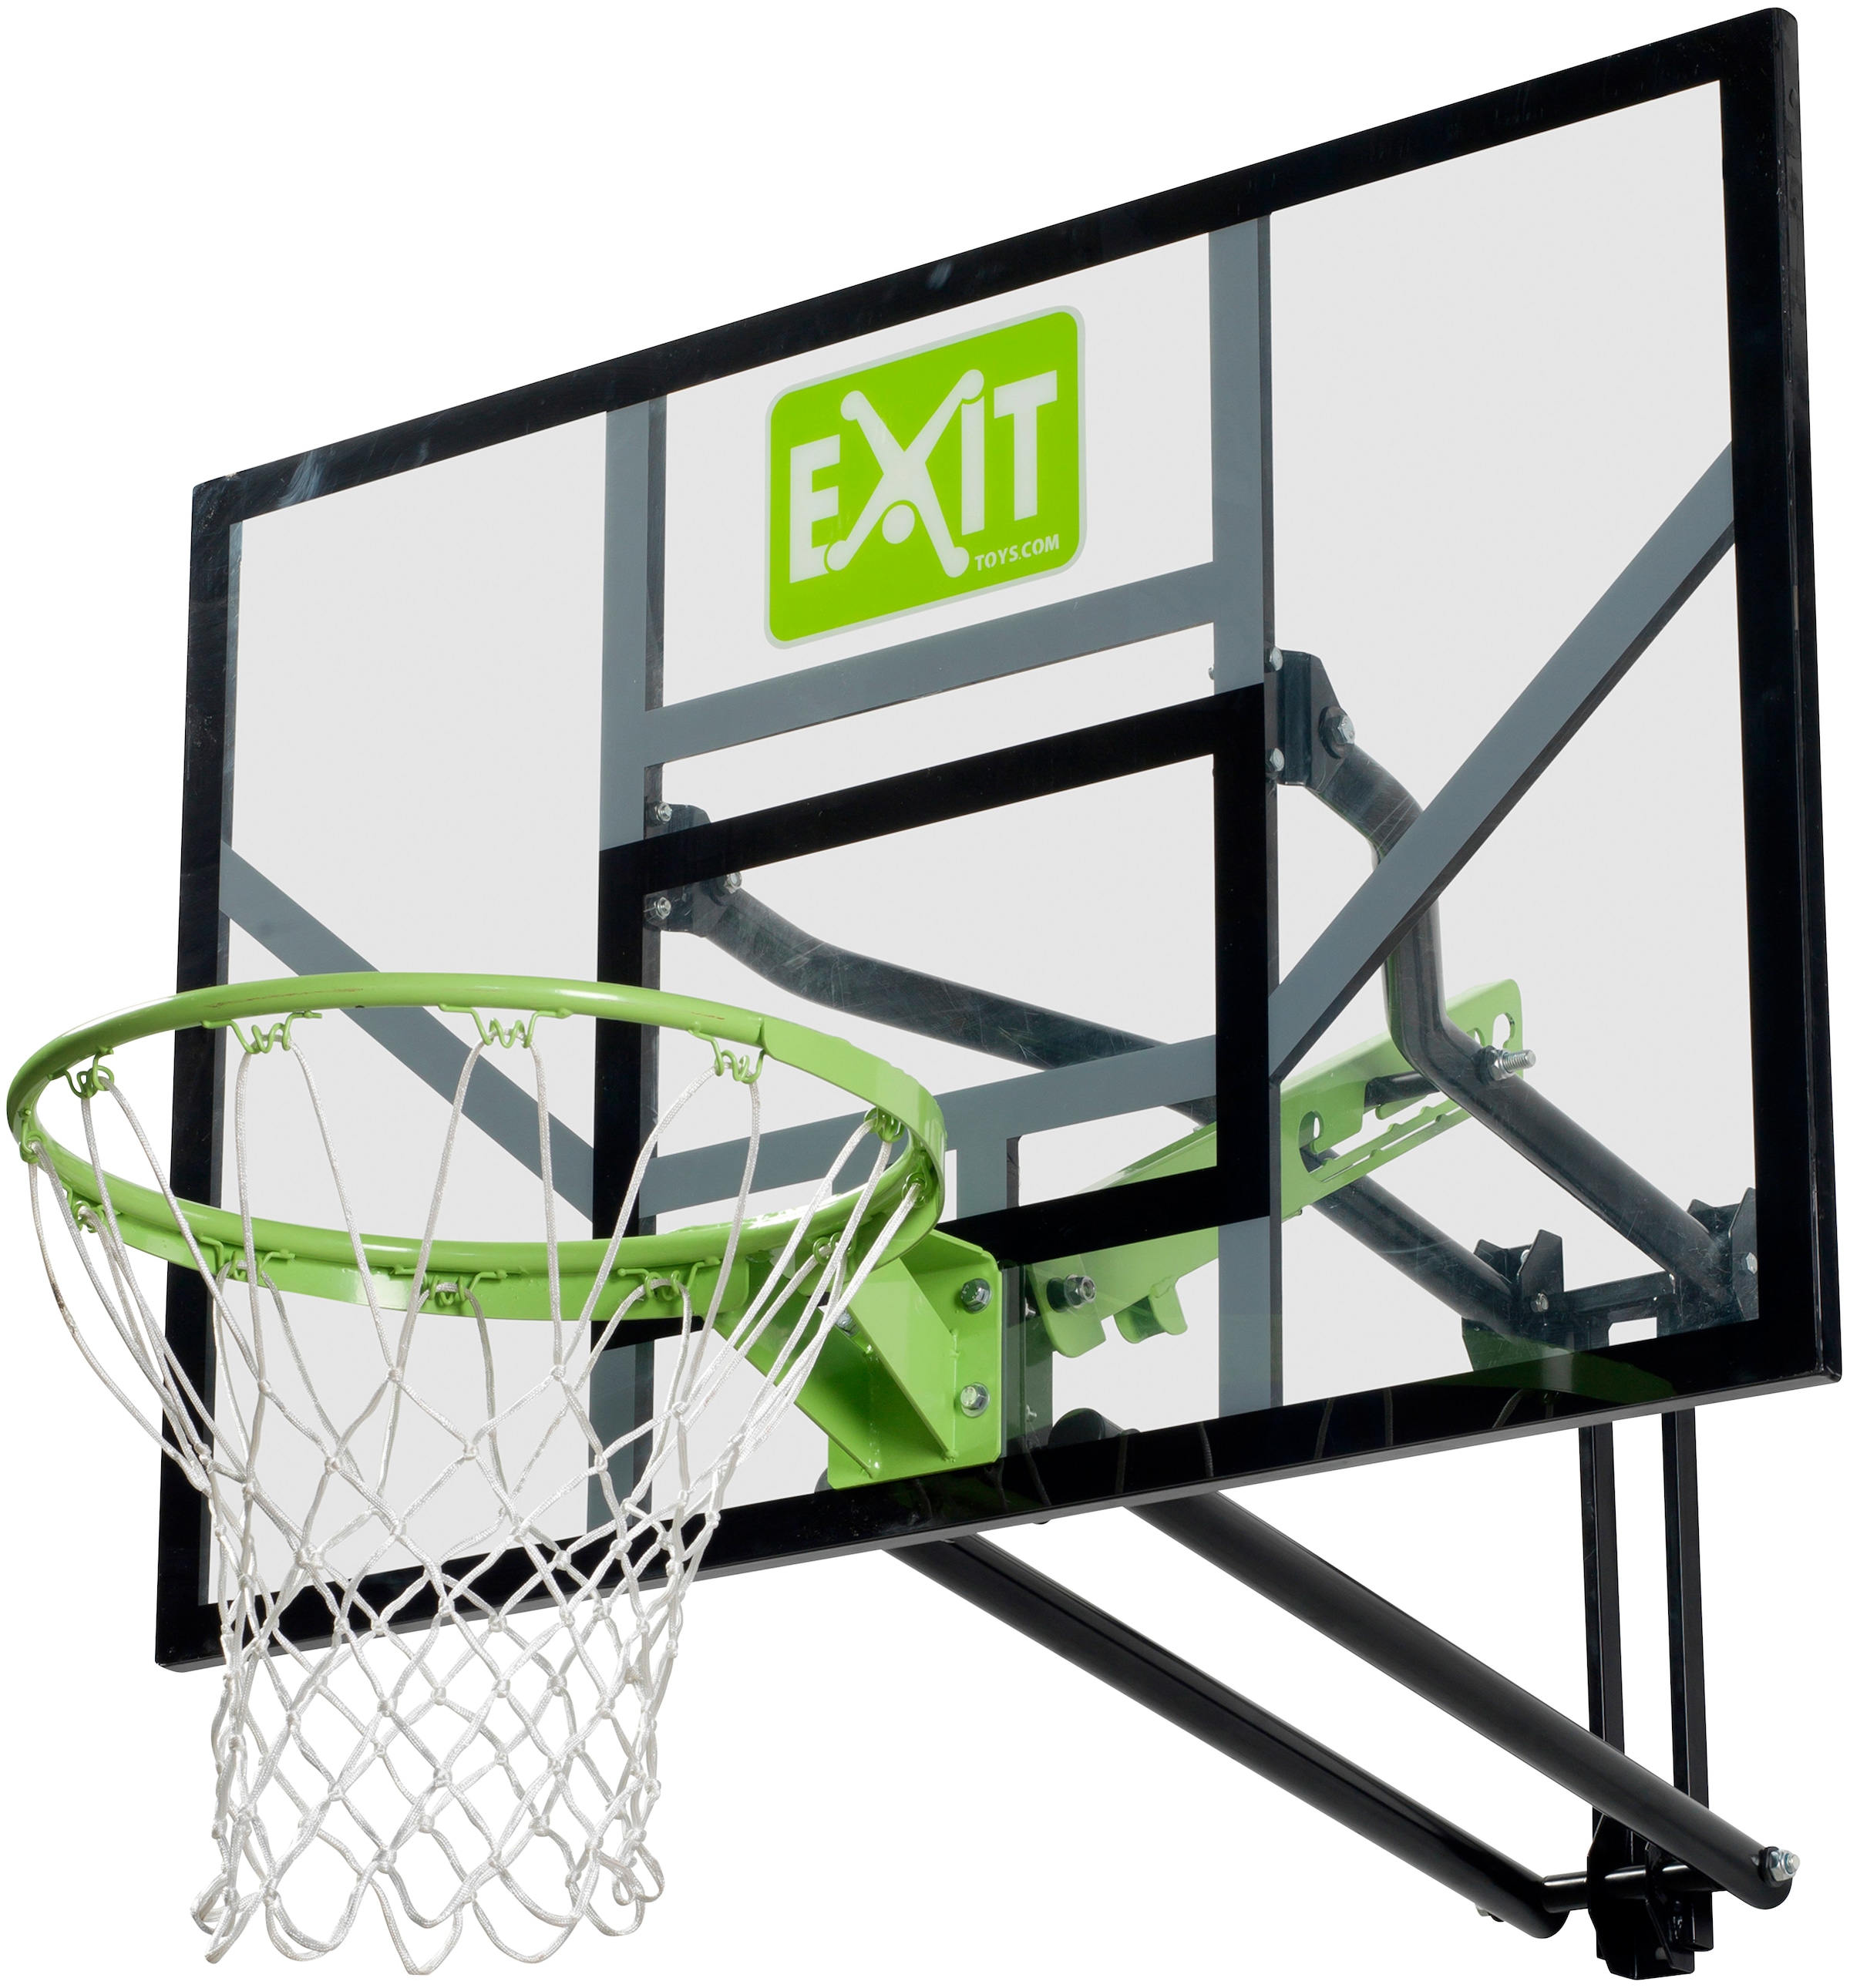 Basketballkorb »GALAXY Wall-mount«, in 5 Höhen einstellbar